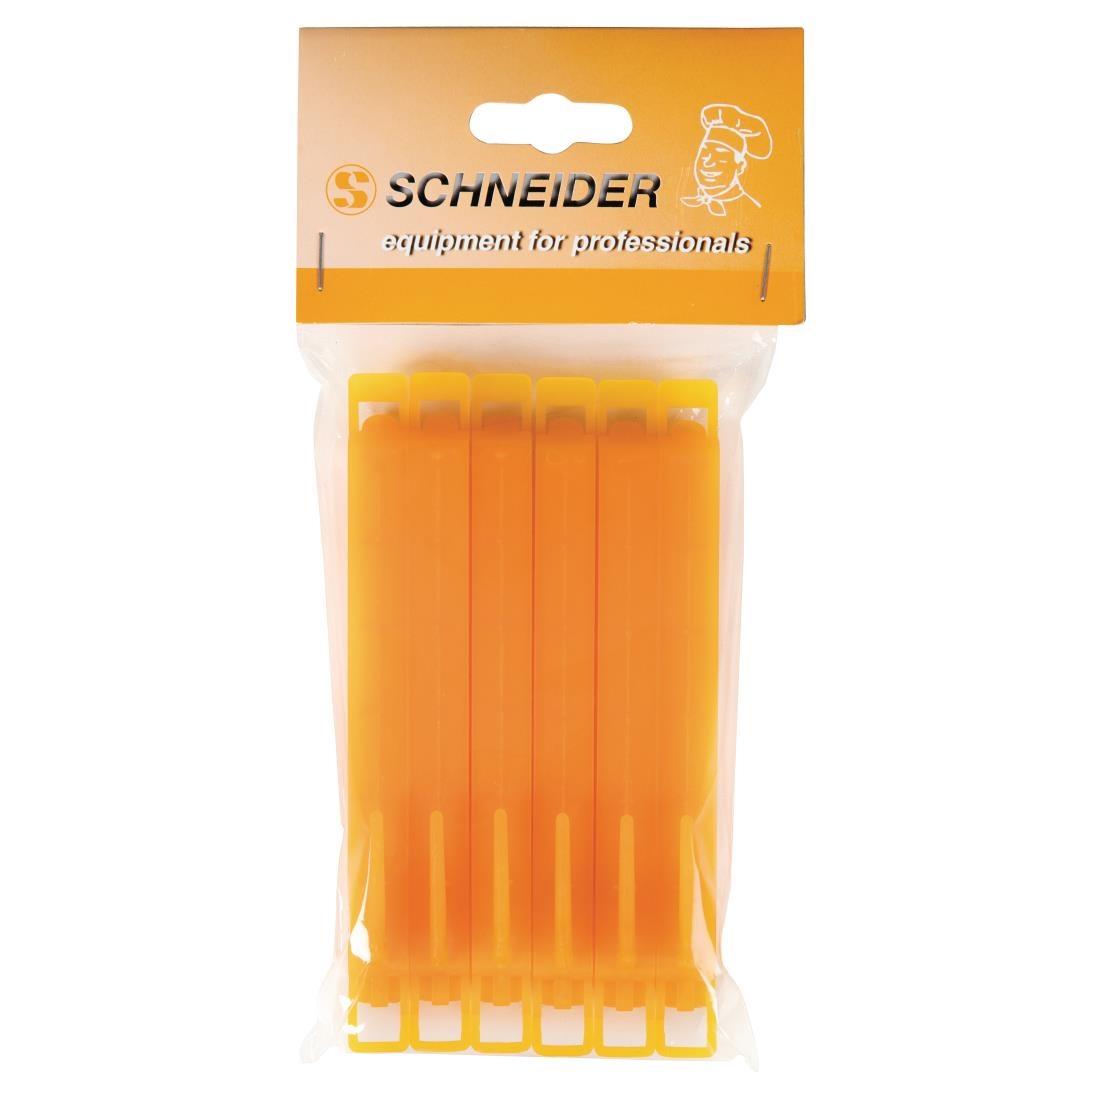 Schneider Fastening Clips 120mm (Pack of 6) - CS774  - 3